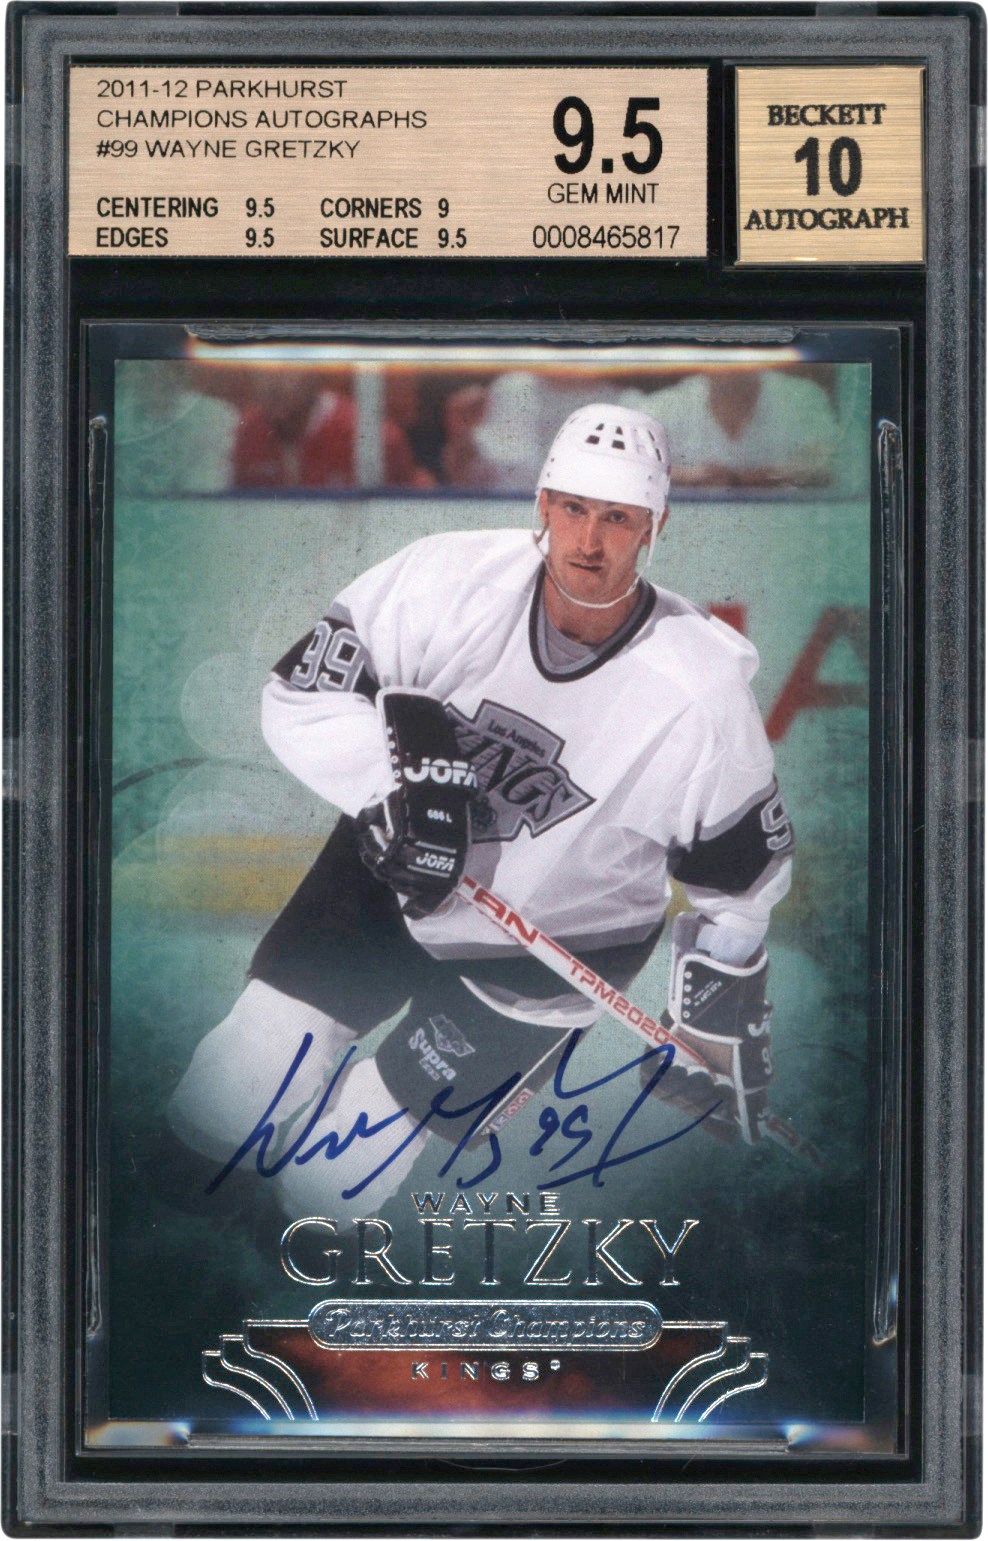 - 2011-2012 Parkhurst Hockey Champions Autograph #99 Wayne Gretzky Card BGS GEM MINT 9.5 Auto 10 (Pop 1 of 1 Highest Graded)